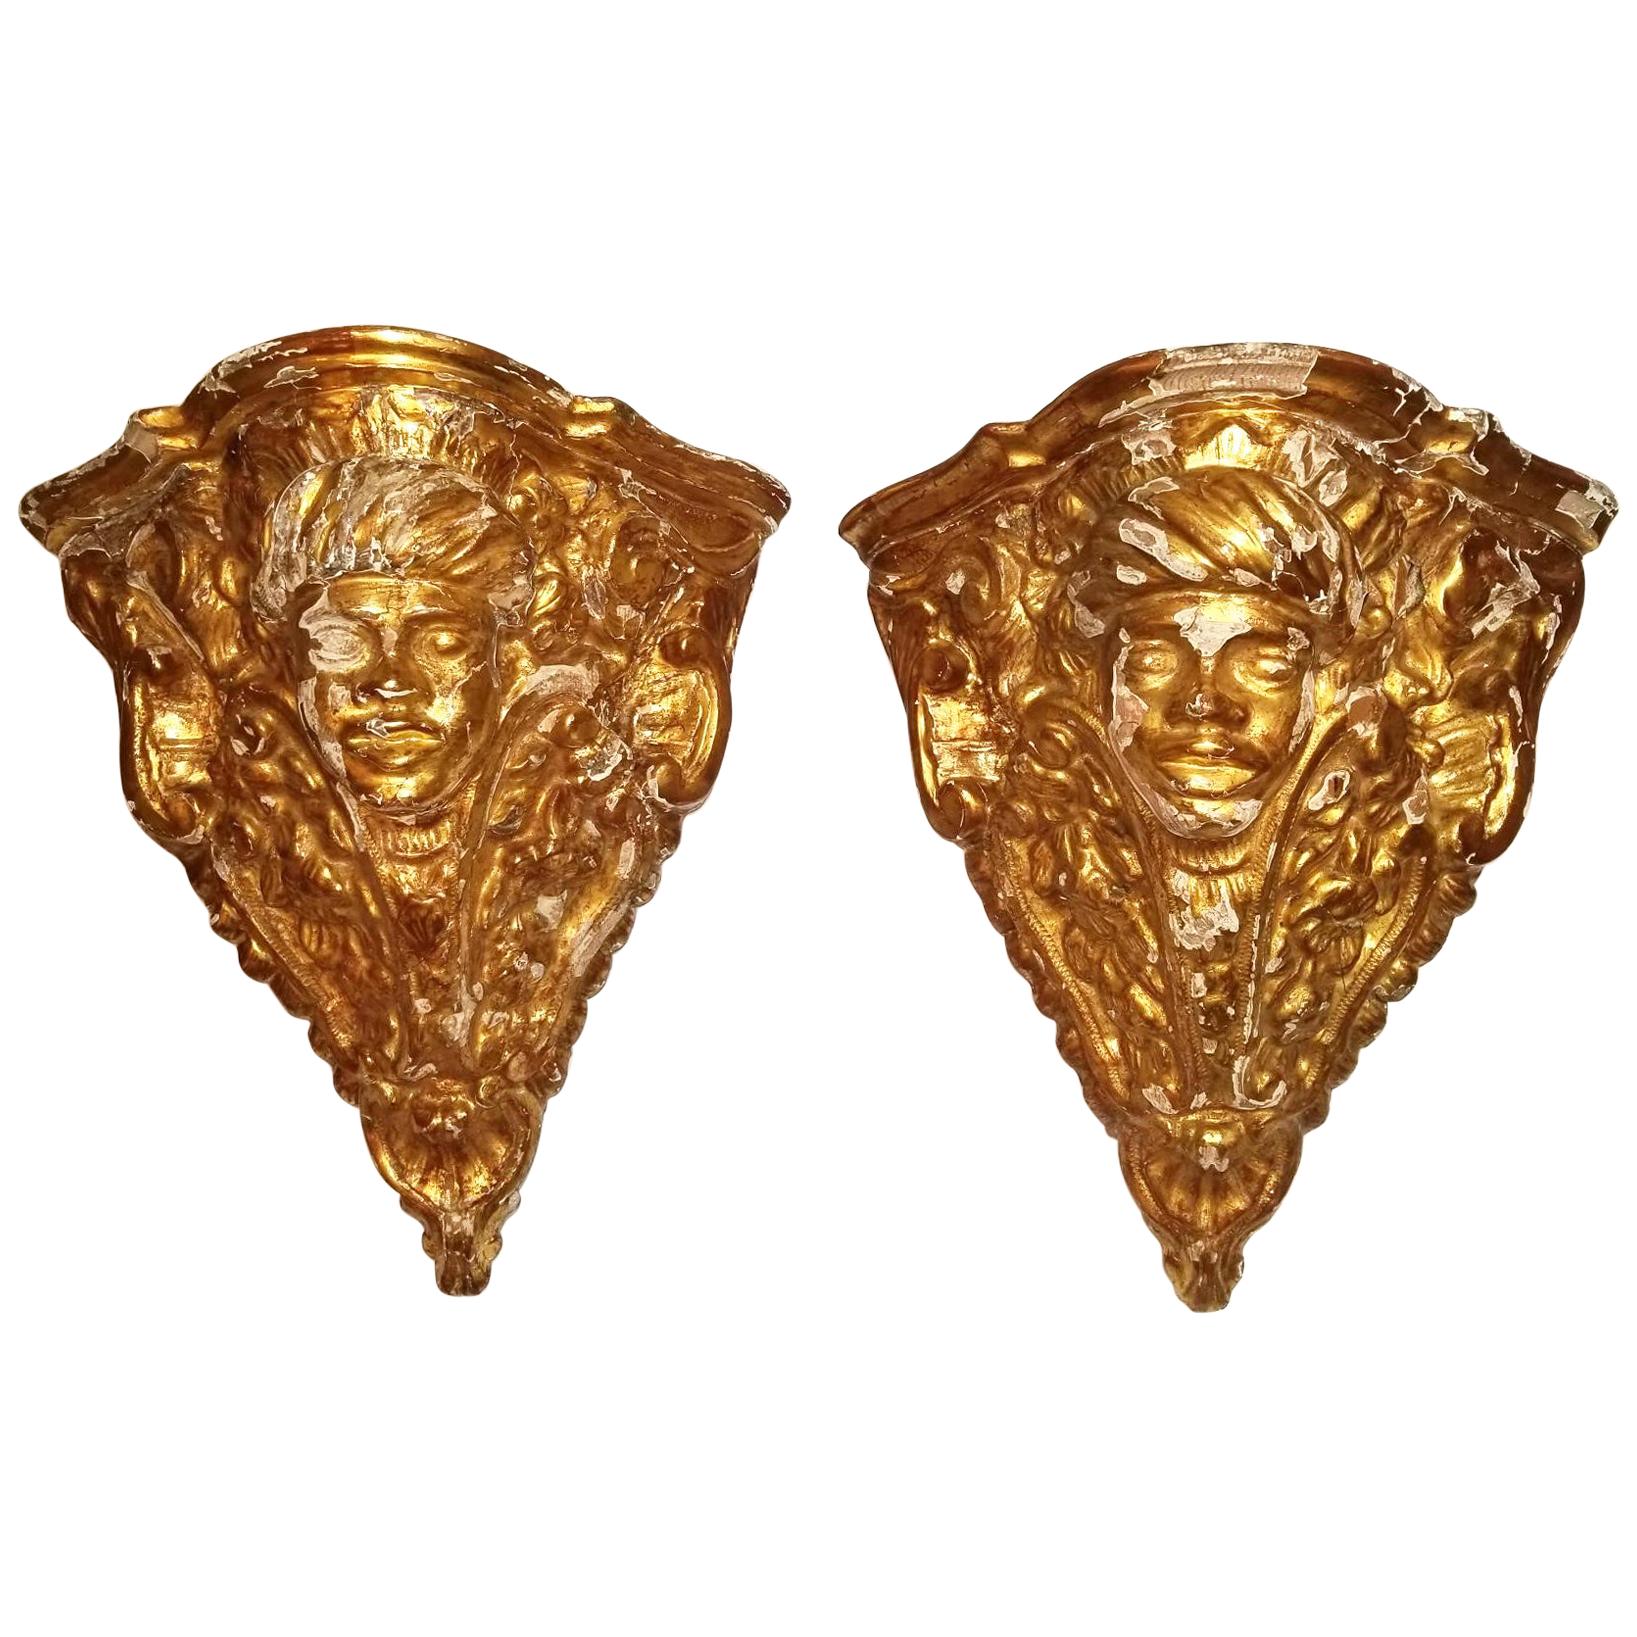 Pareja de ménsulas esquineras de madera dorada italiana del siglo XVIII